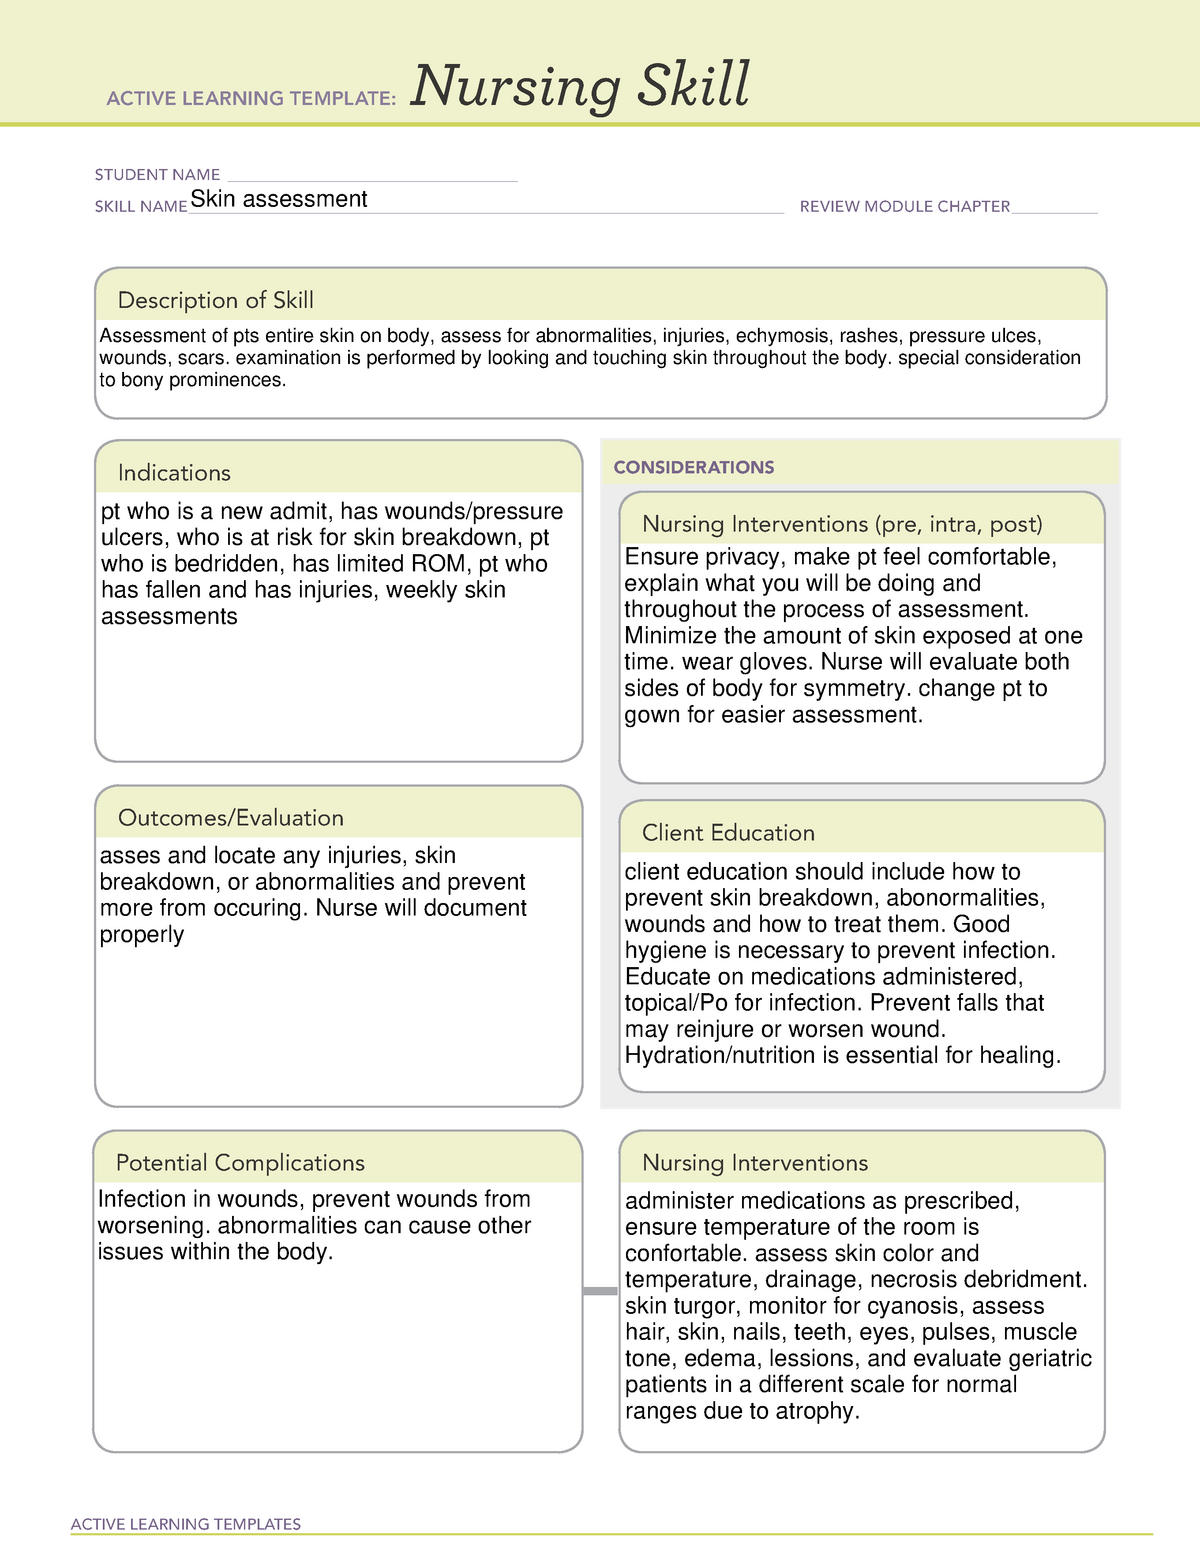 nursing-skill-skin-assesment-uti-active-learning-templates-nursing-skill-student-name-studocu